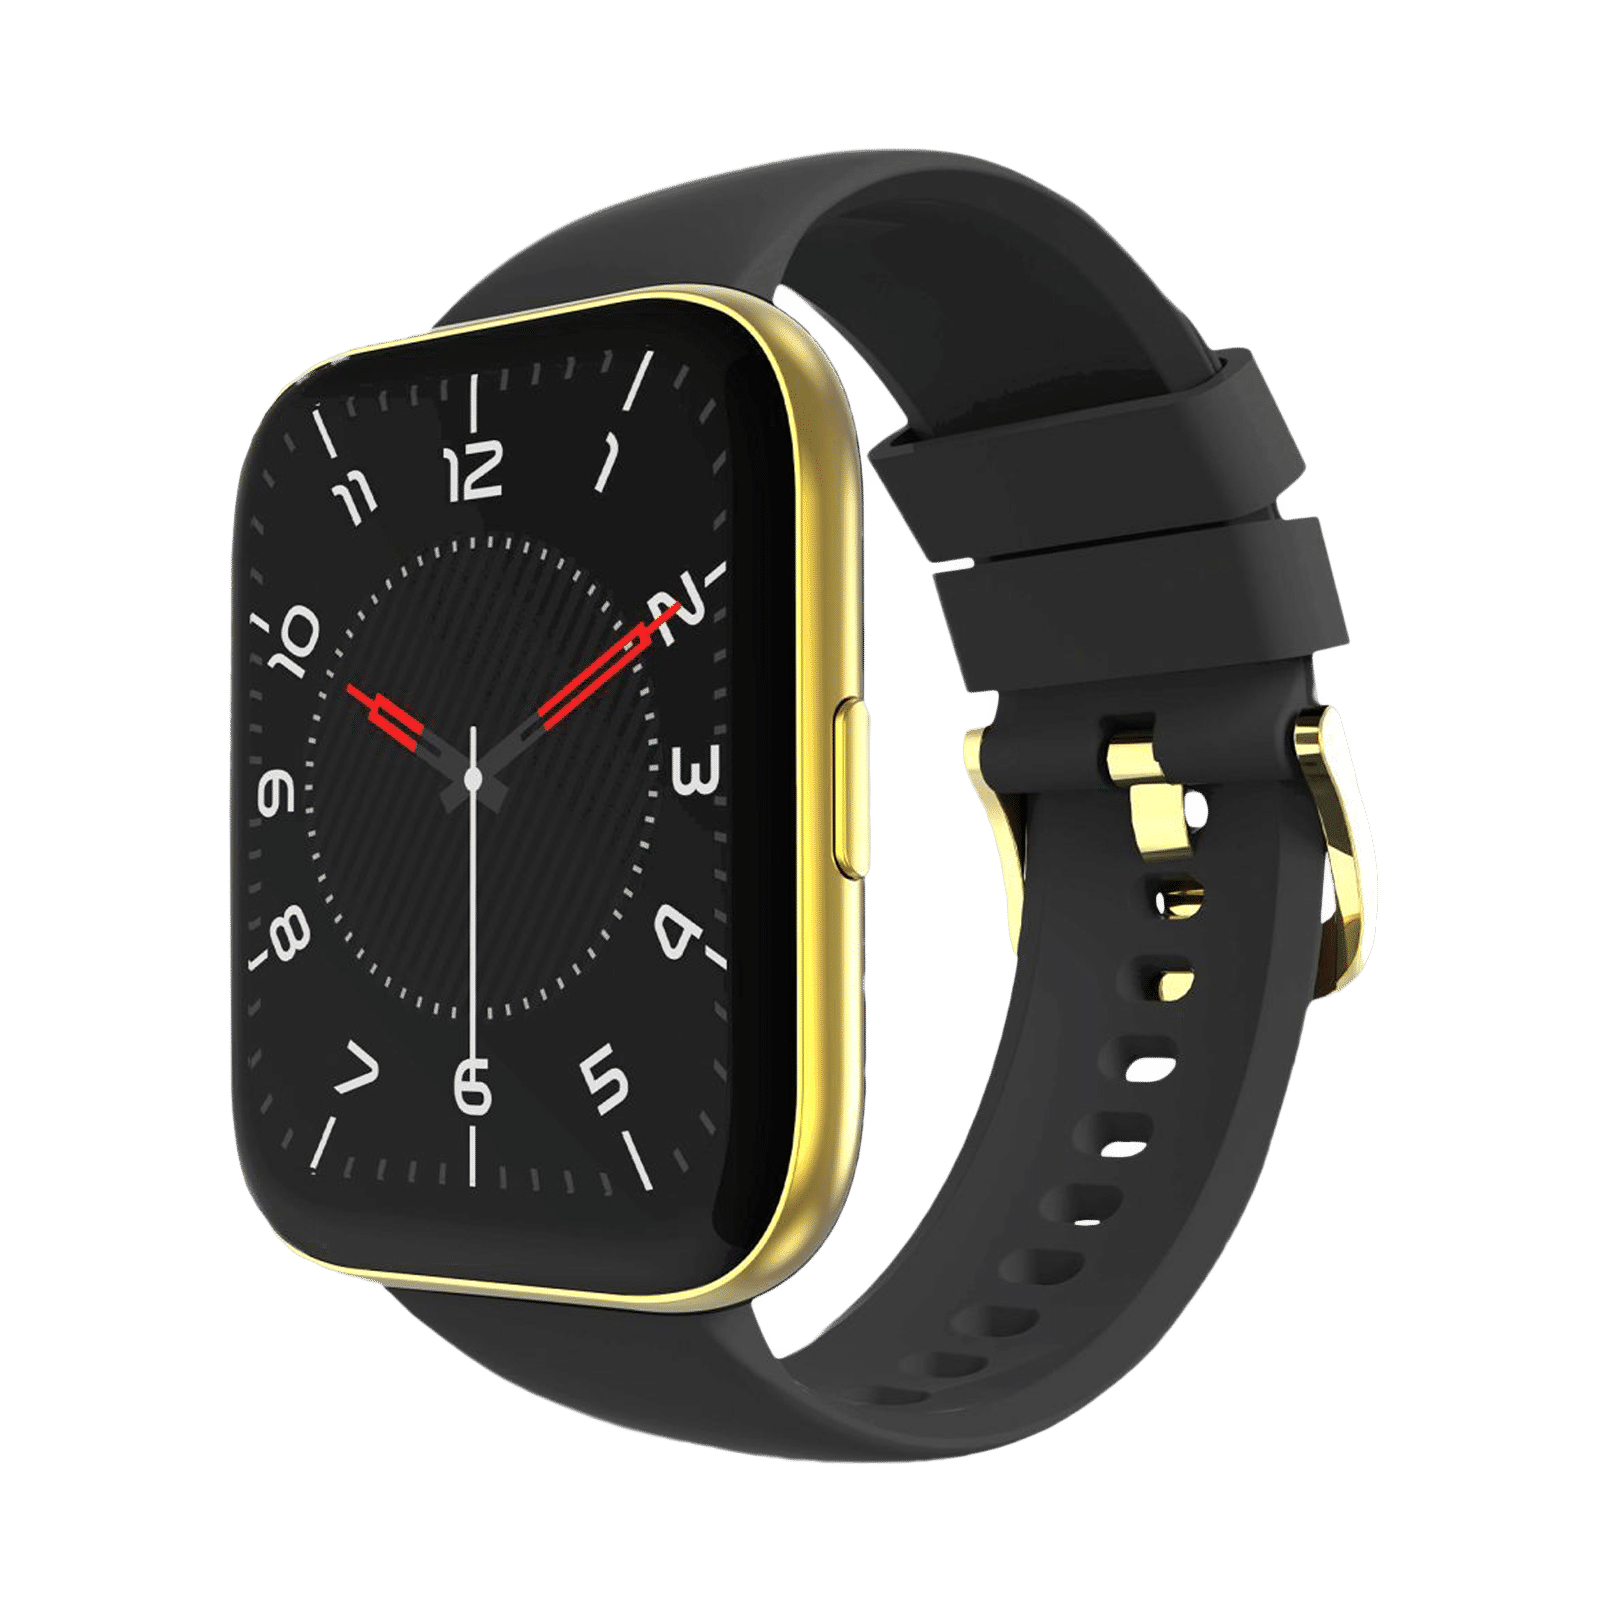 IP67 Waterproof and Dust-Proof Smartwatch | Smart watch, Fitness tracker,  Smart